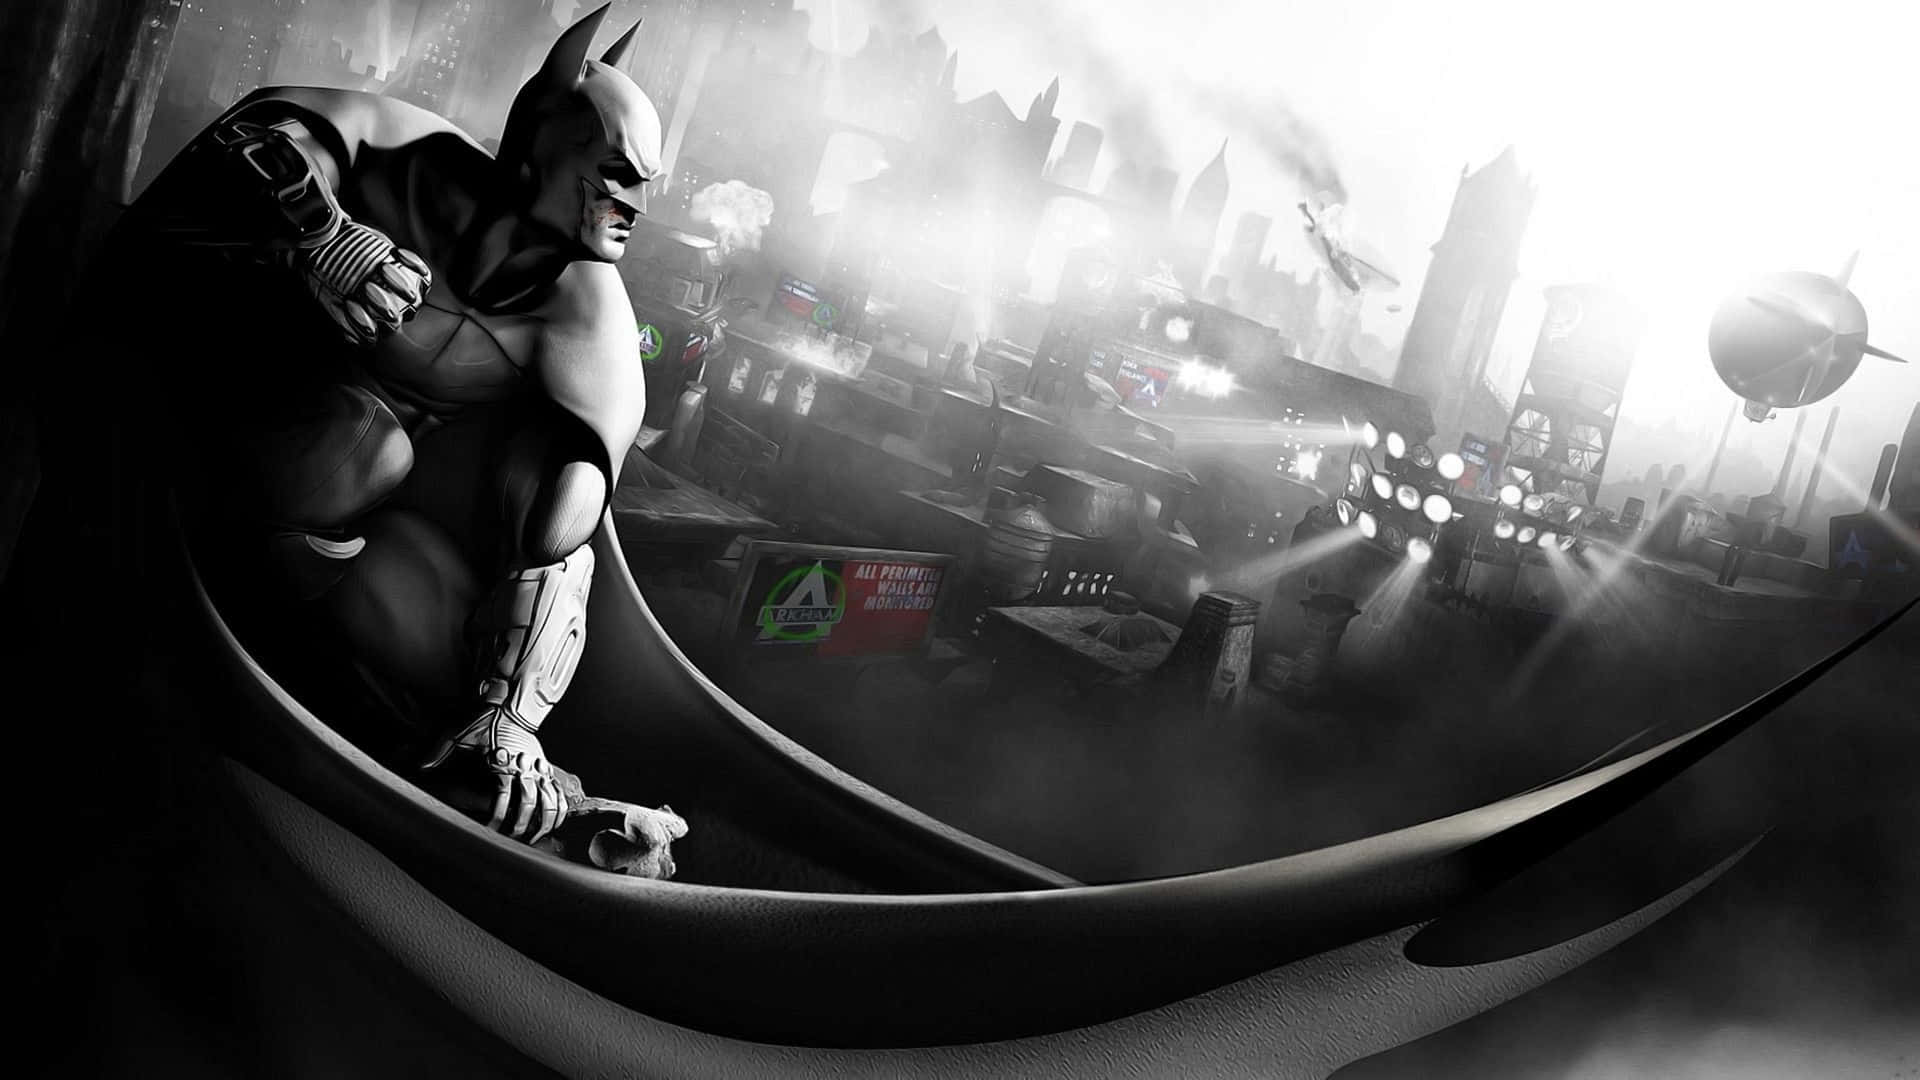 Batmanarkham City Bakgrundsbild.